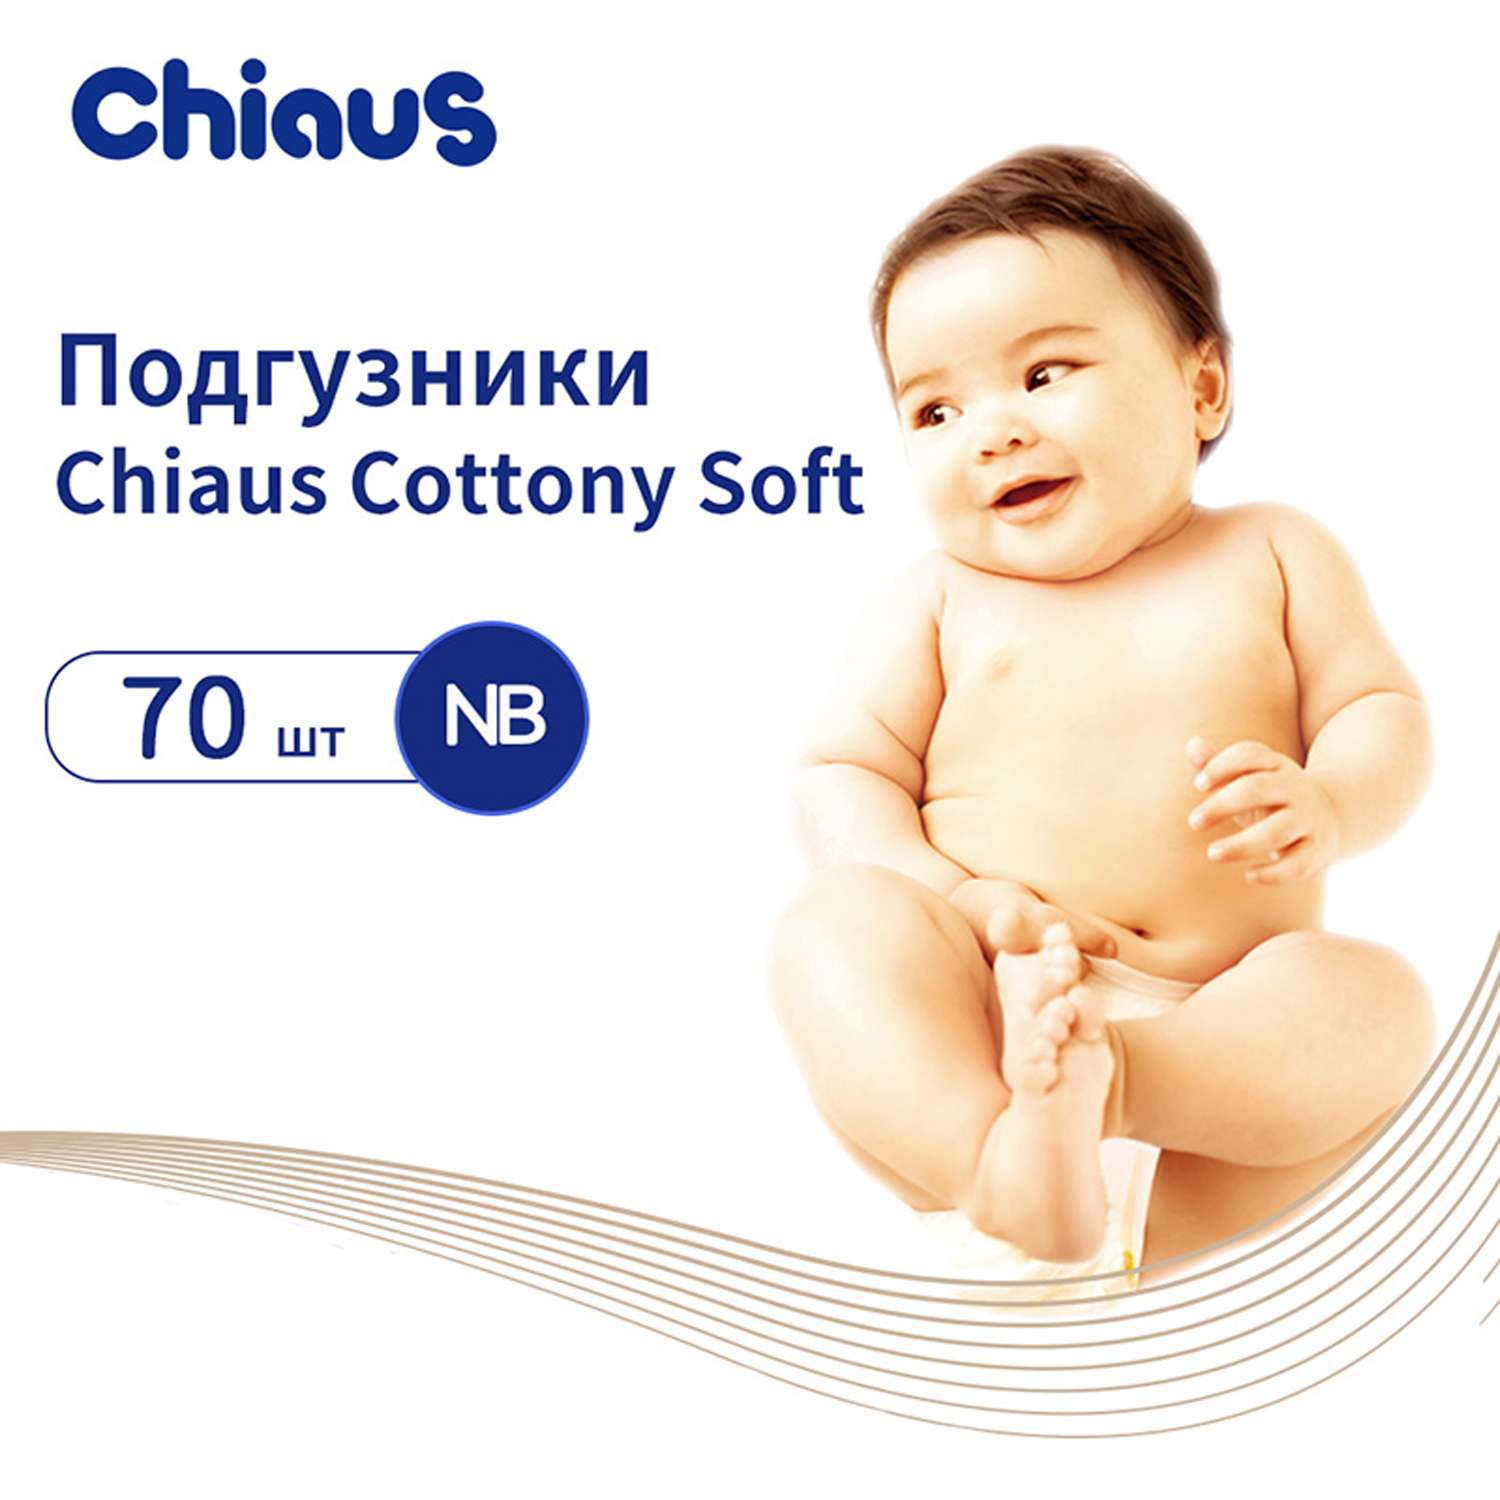 Подгузники Chiaus Cottony Soft NB (<5 кг) 70 шт - фото 3